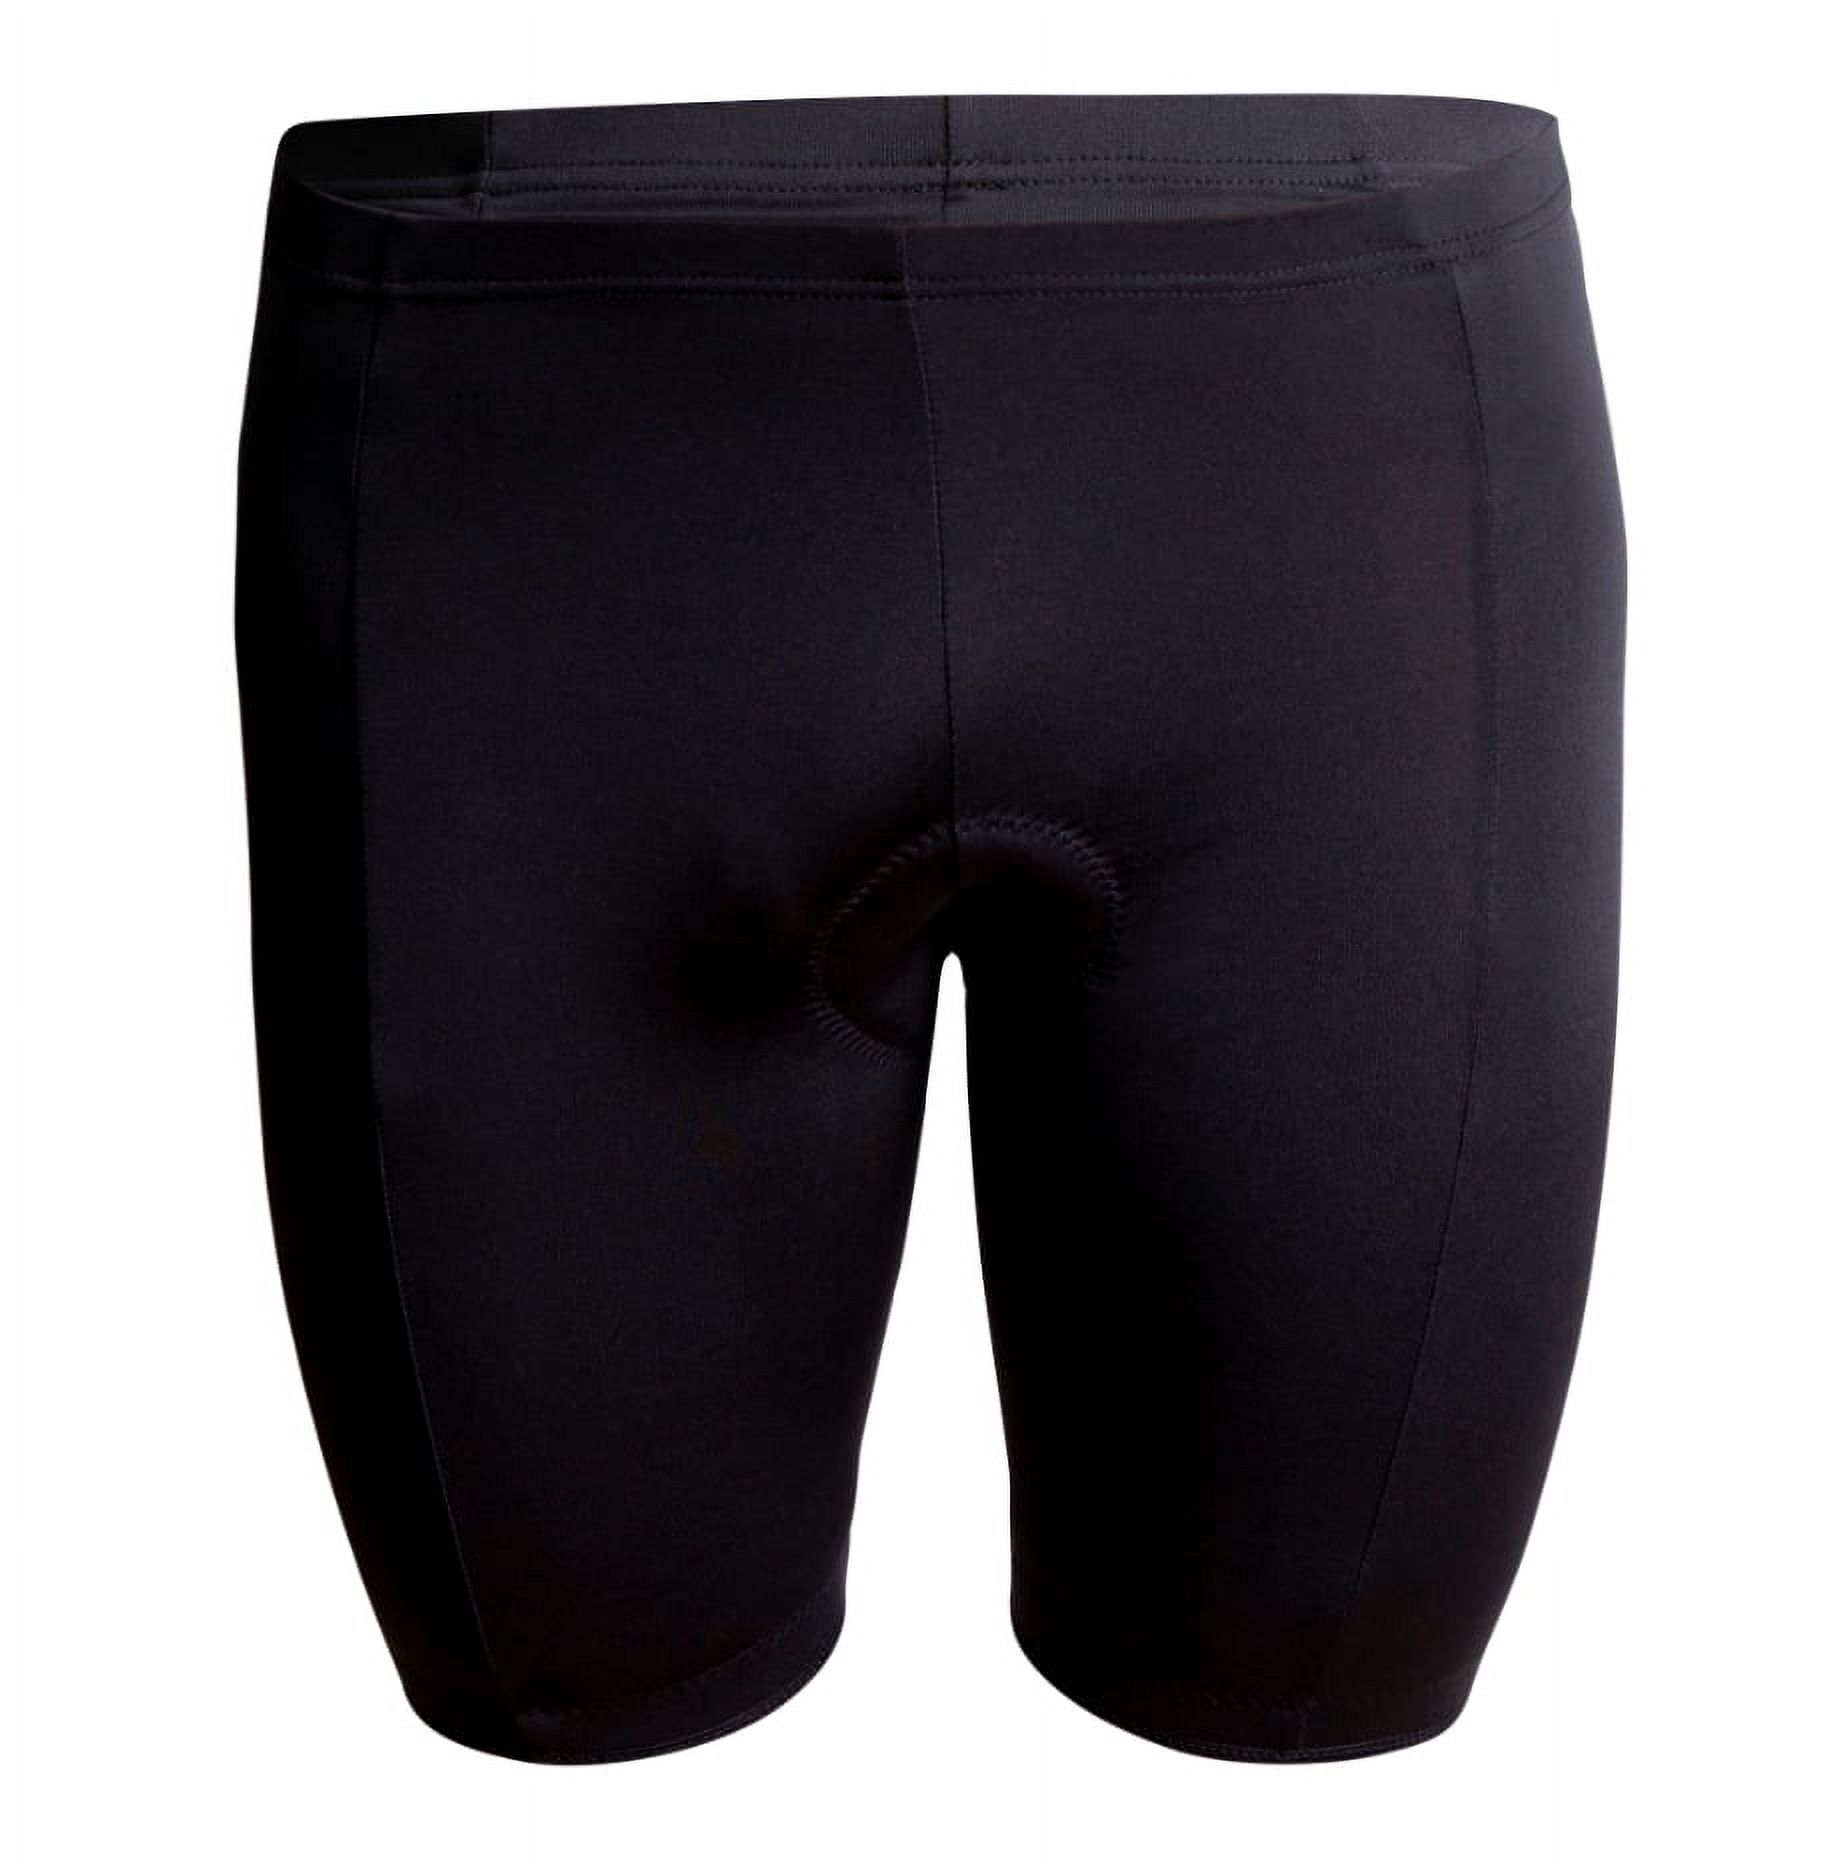 Classic Men's Bike Shorts, Medium - image 1 of 1